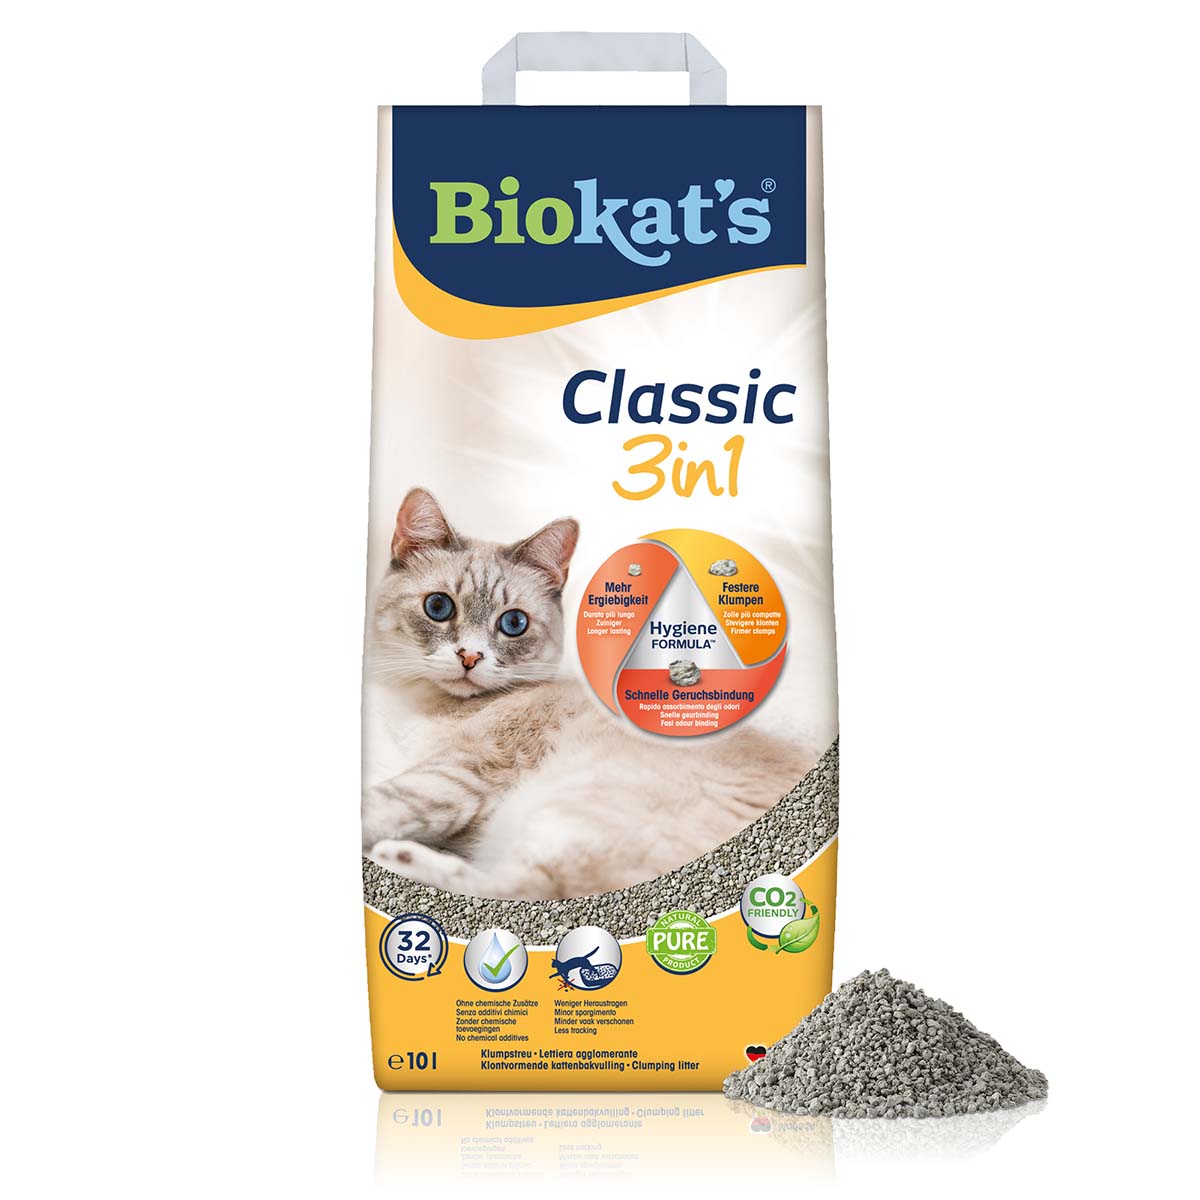 Biokat’s Classic